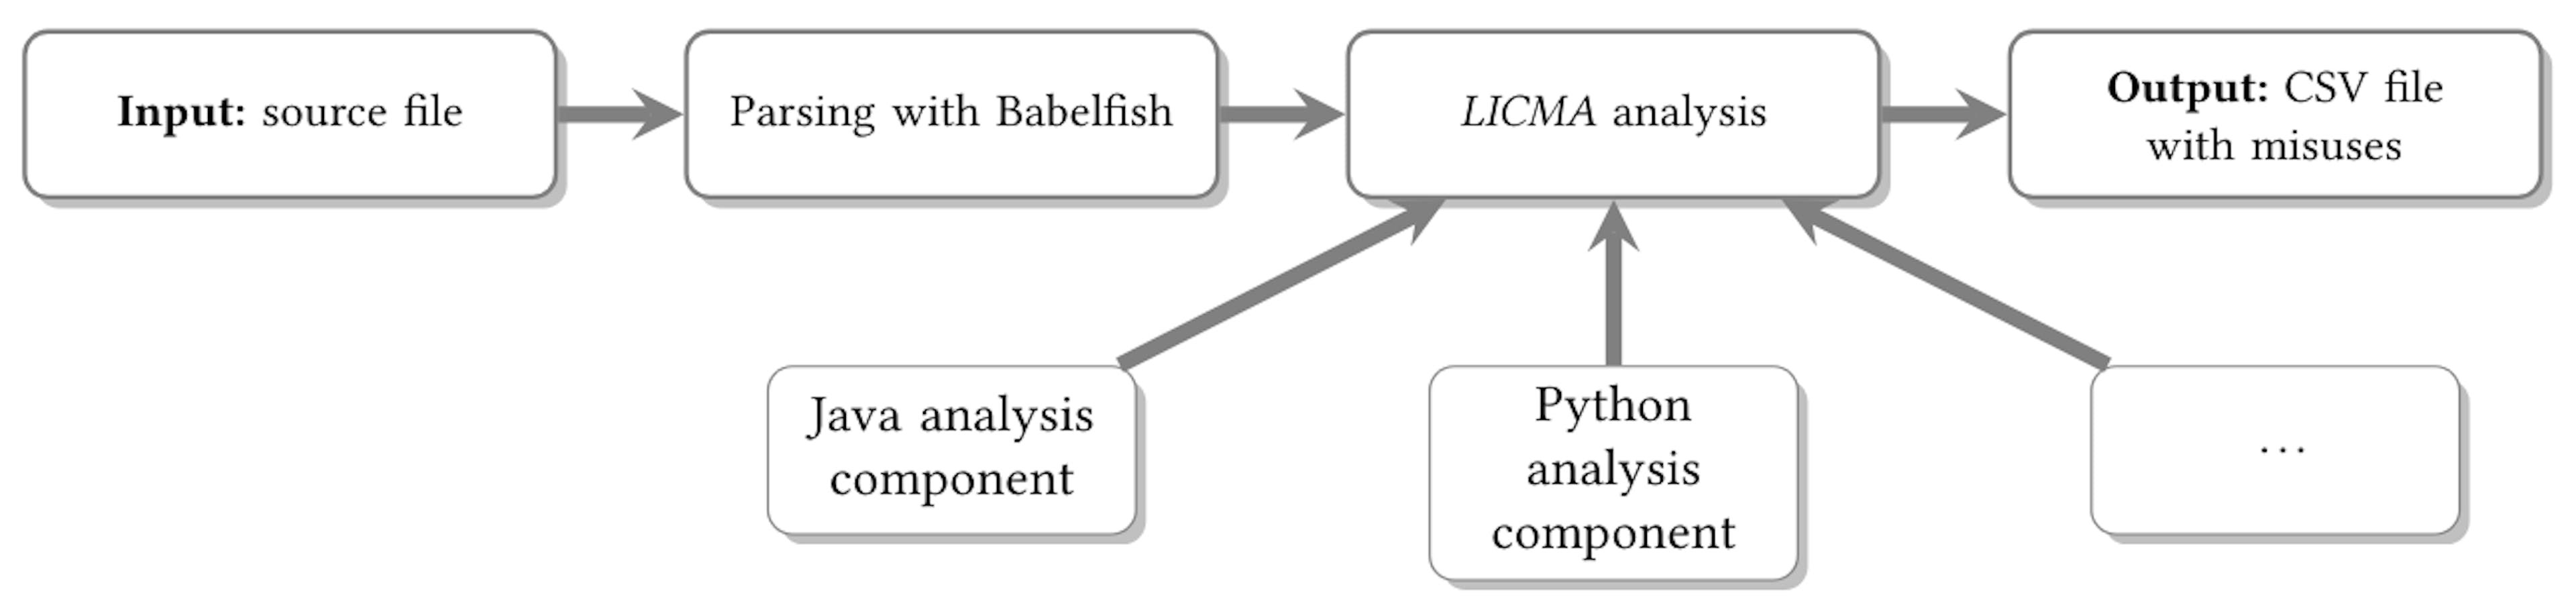 Figure 1: LICMA analysis framework.